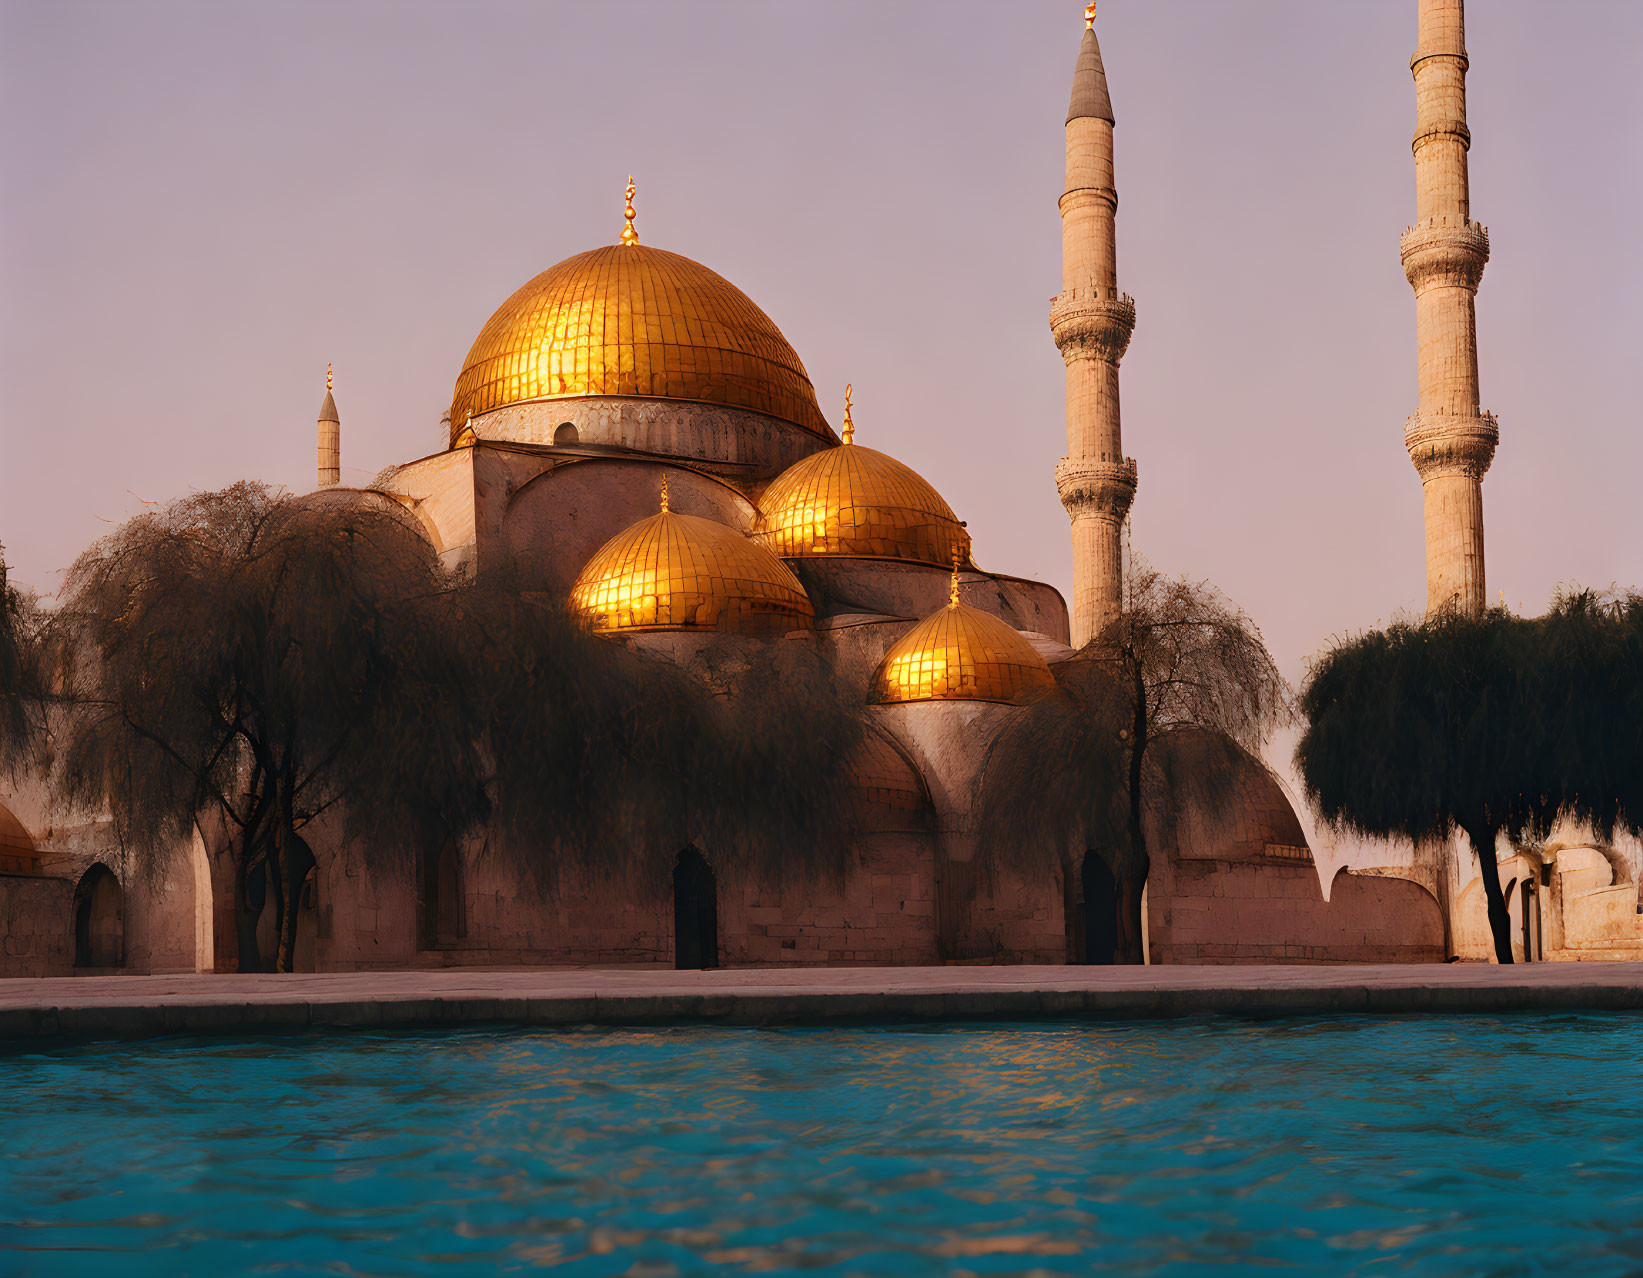  Islamic architecture